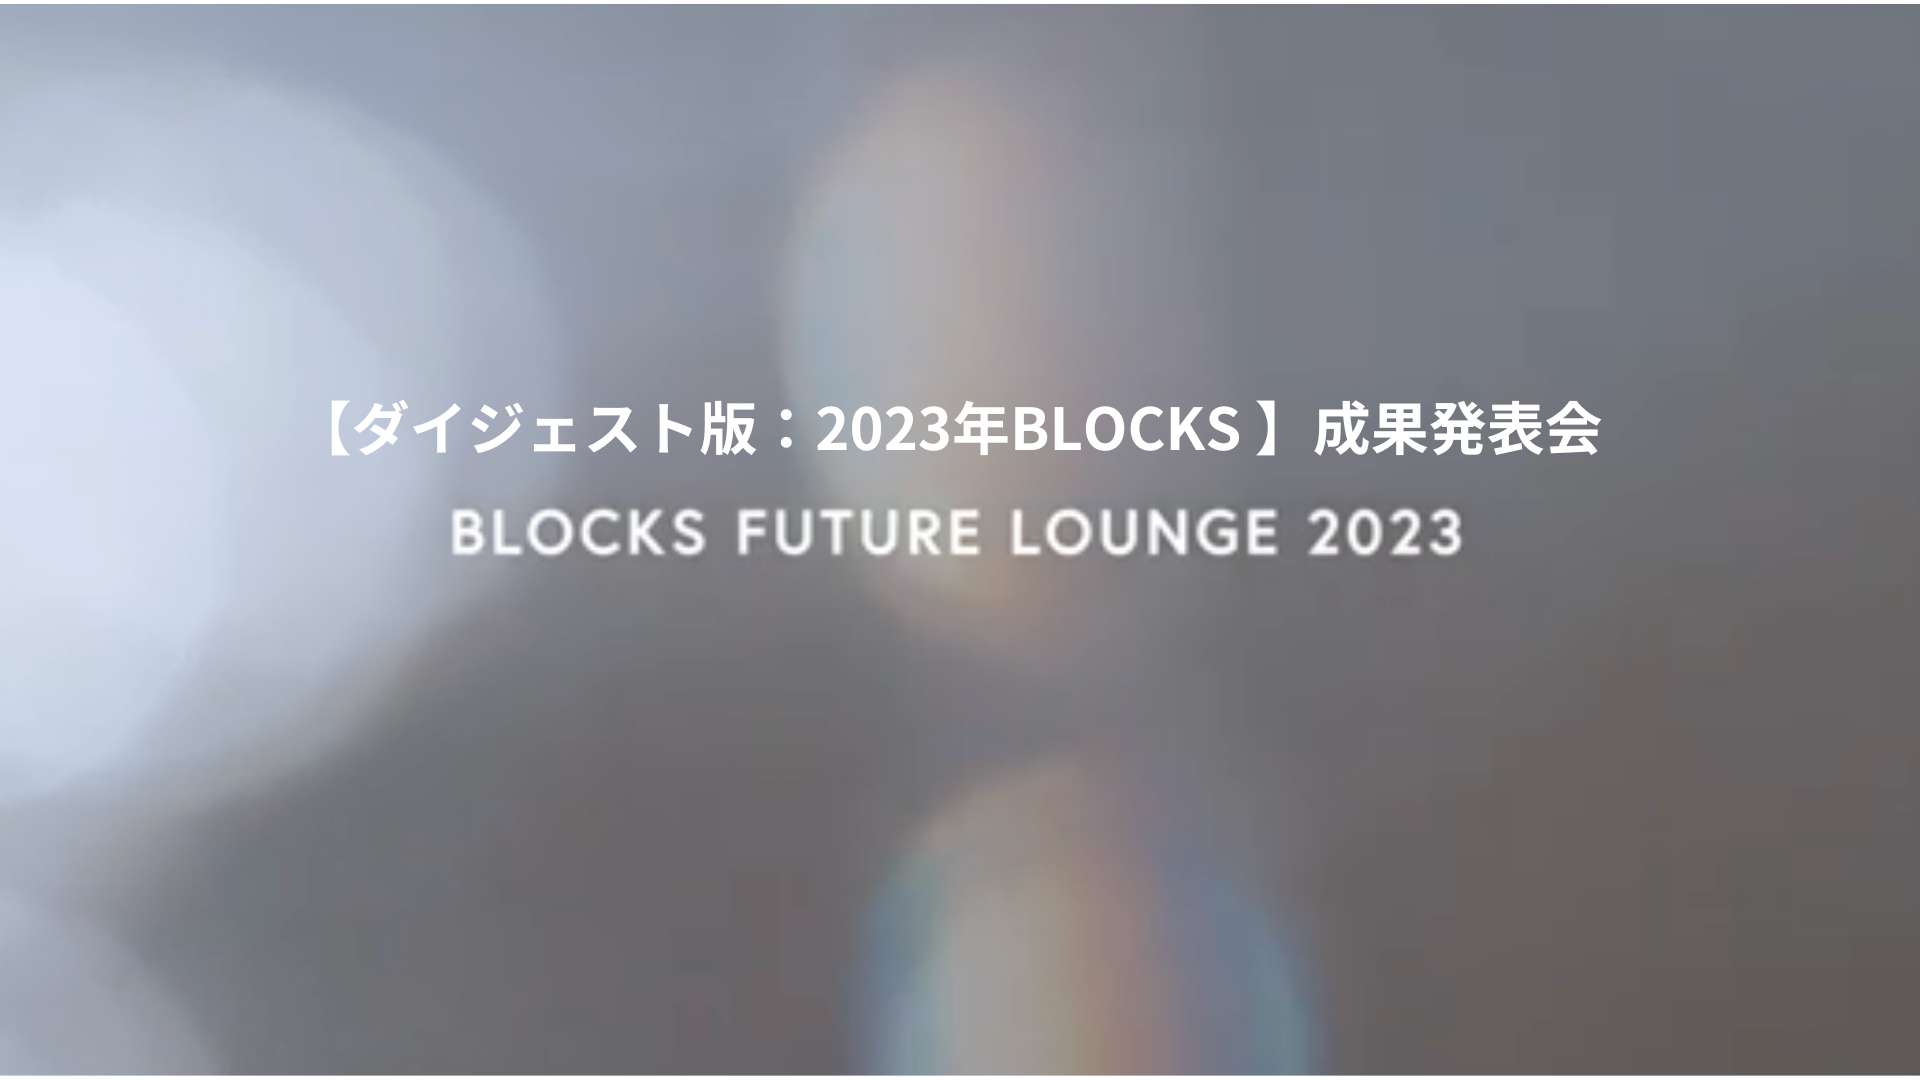 BLOCKS FUTURE LOUNGE 2023（成果発表会）のダイジェストを公開しました！